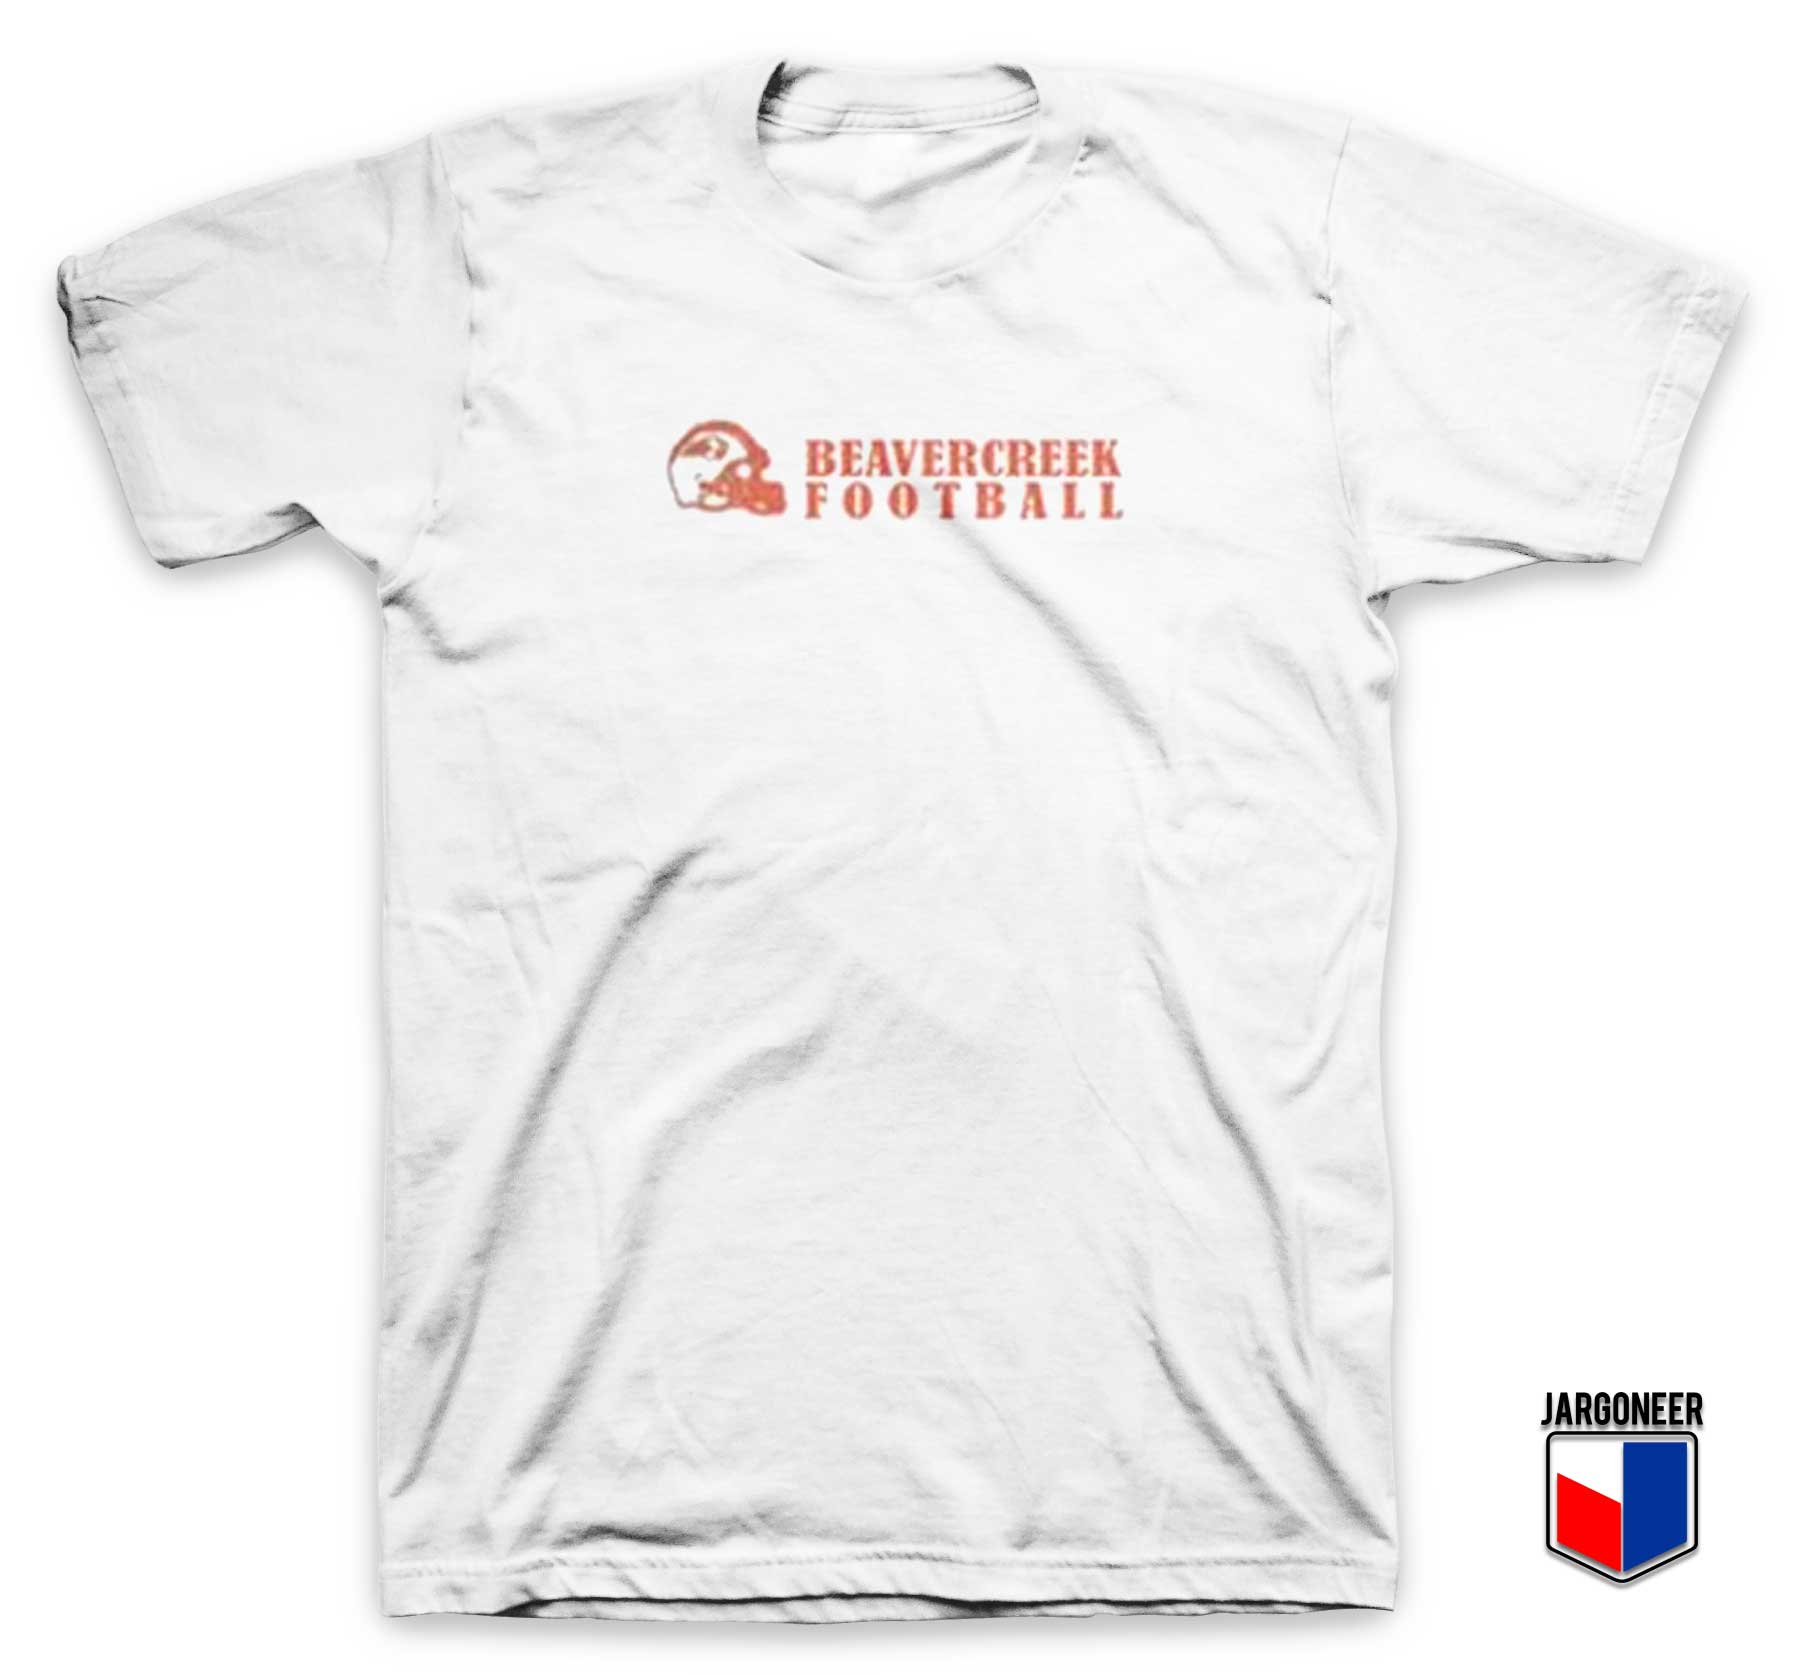 Beavercreek Football - Shop Unique Graphic Cool Shirt Designs